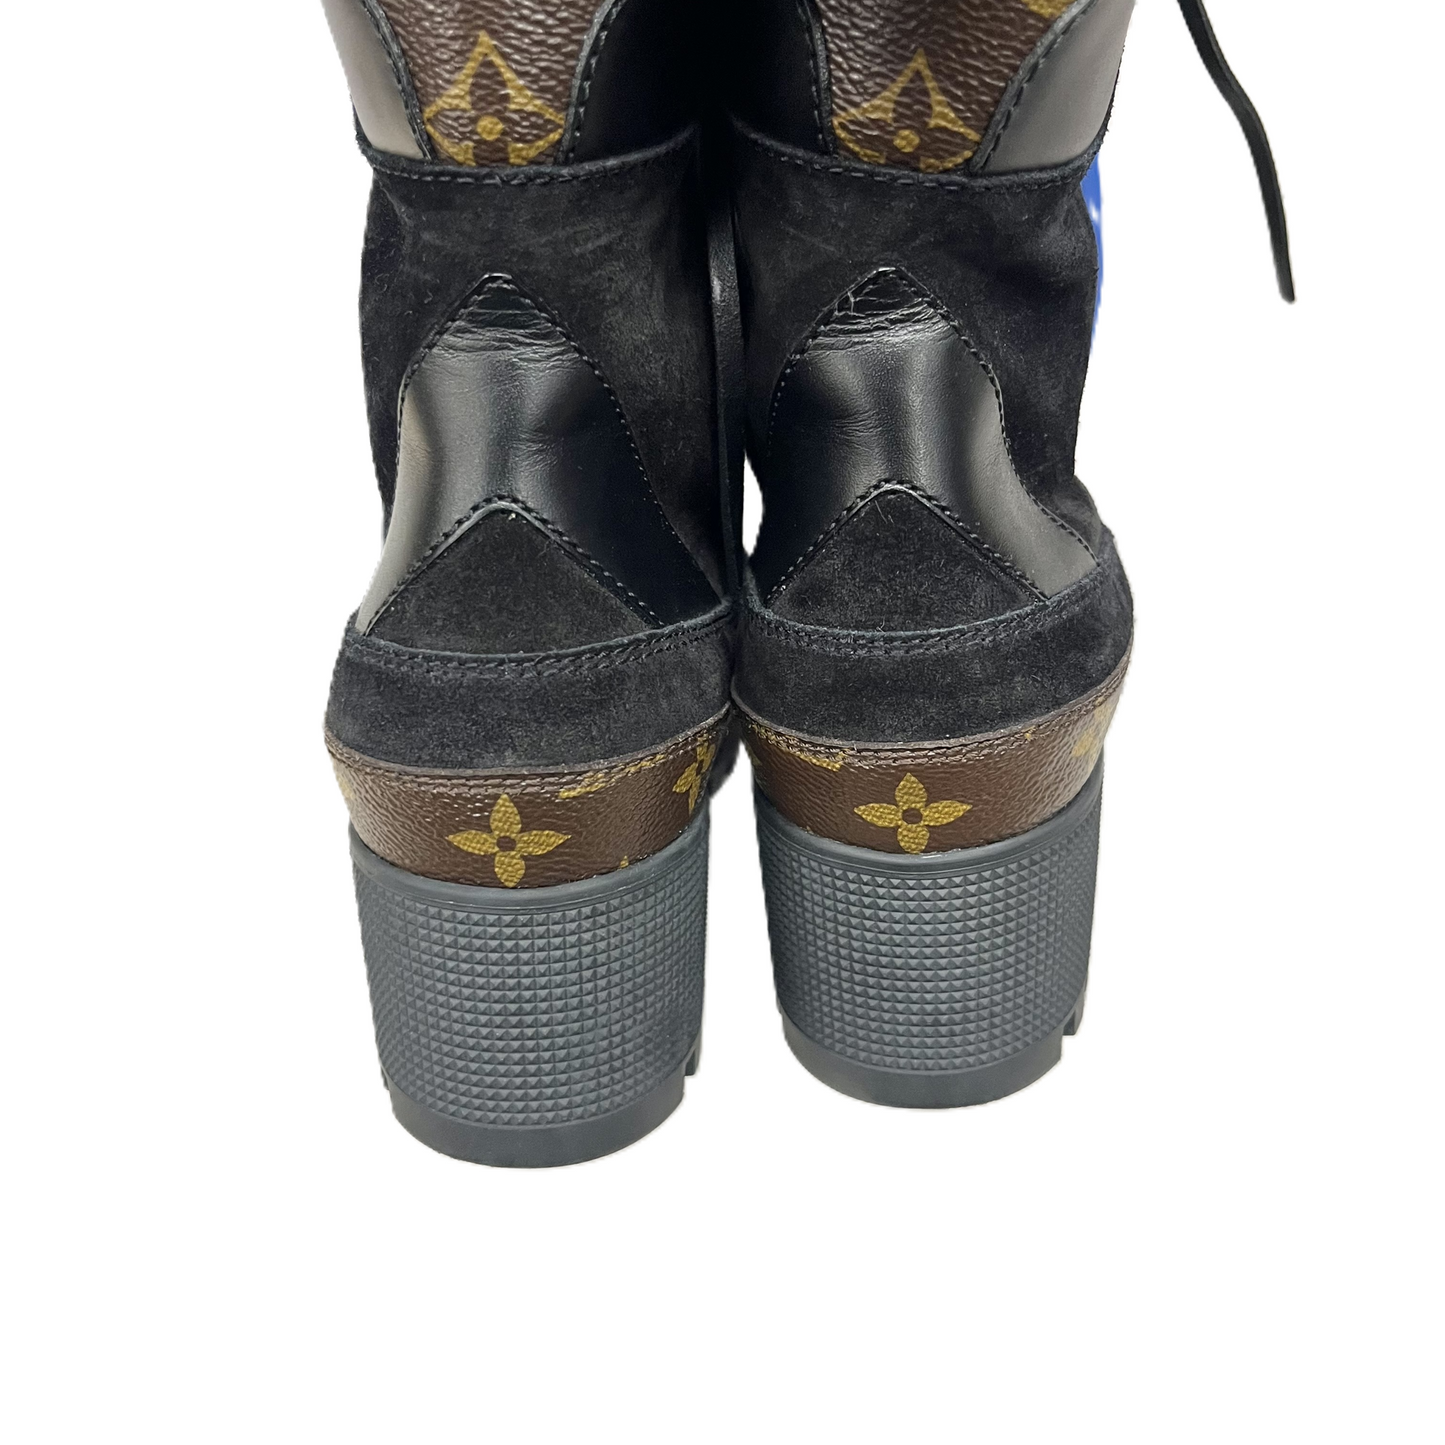 Black & Brown Boots Luxury Designer By Louis Vuitton, Size: 6.5